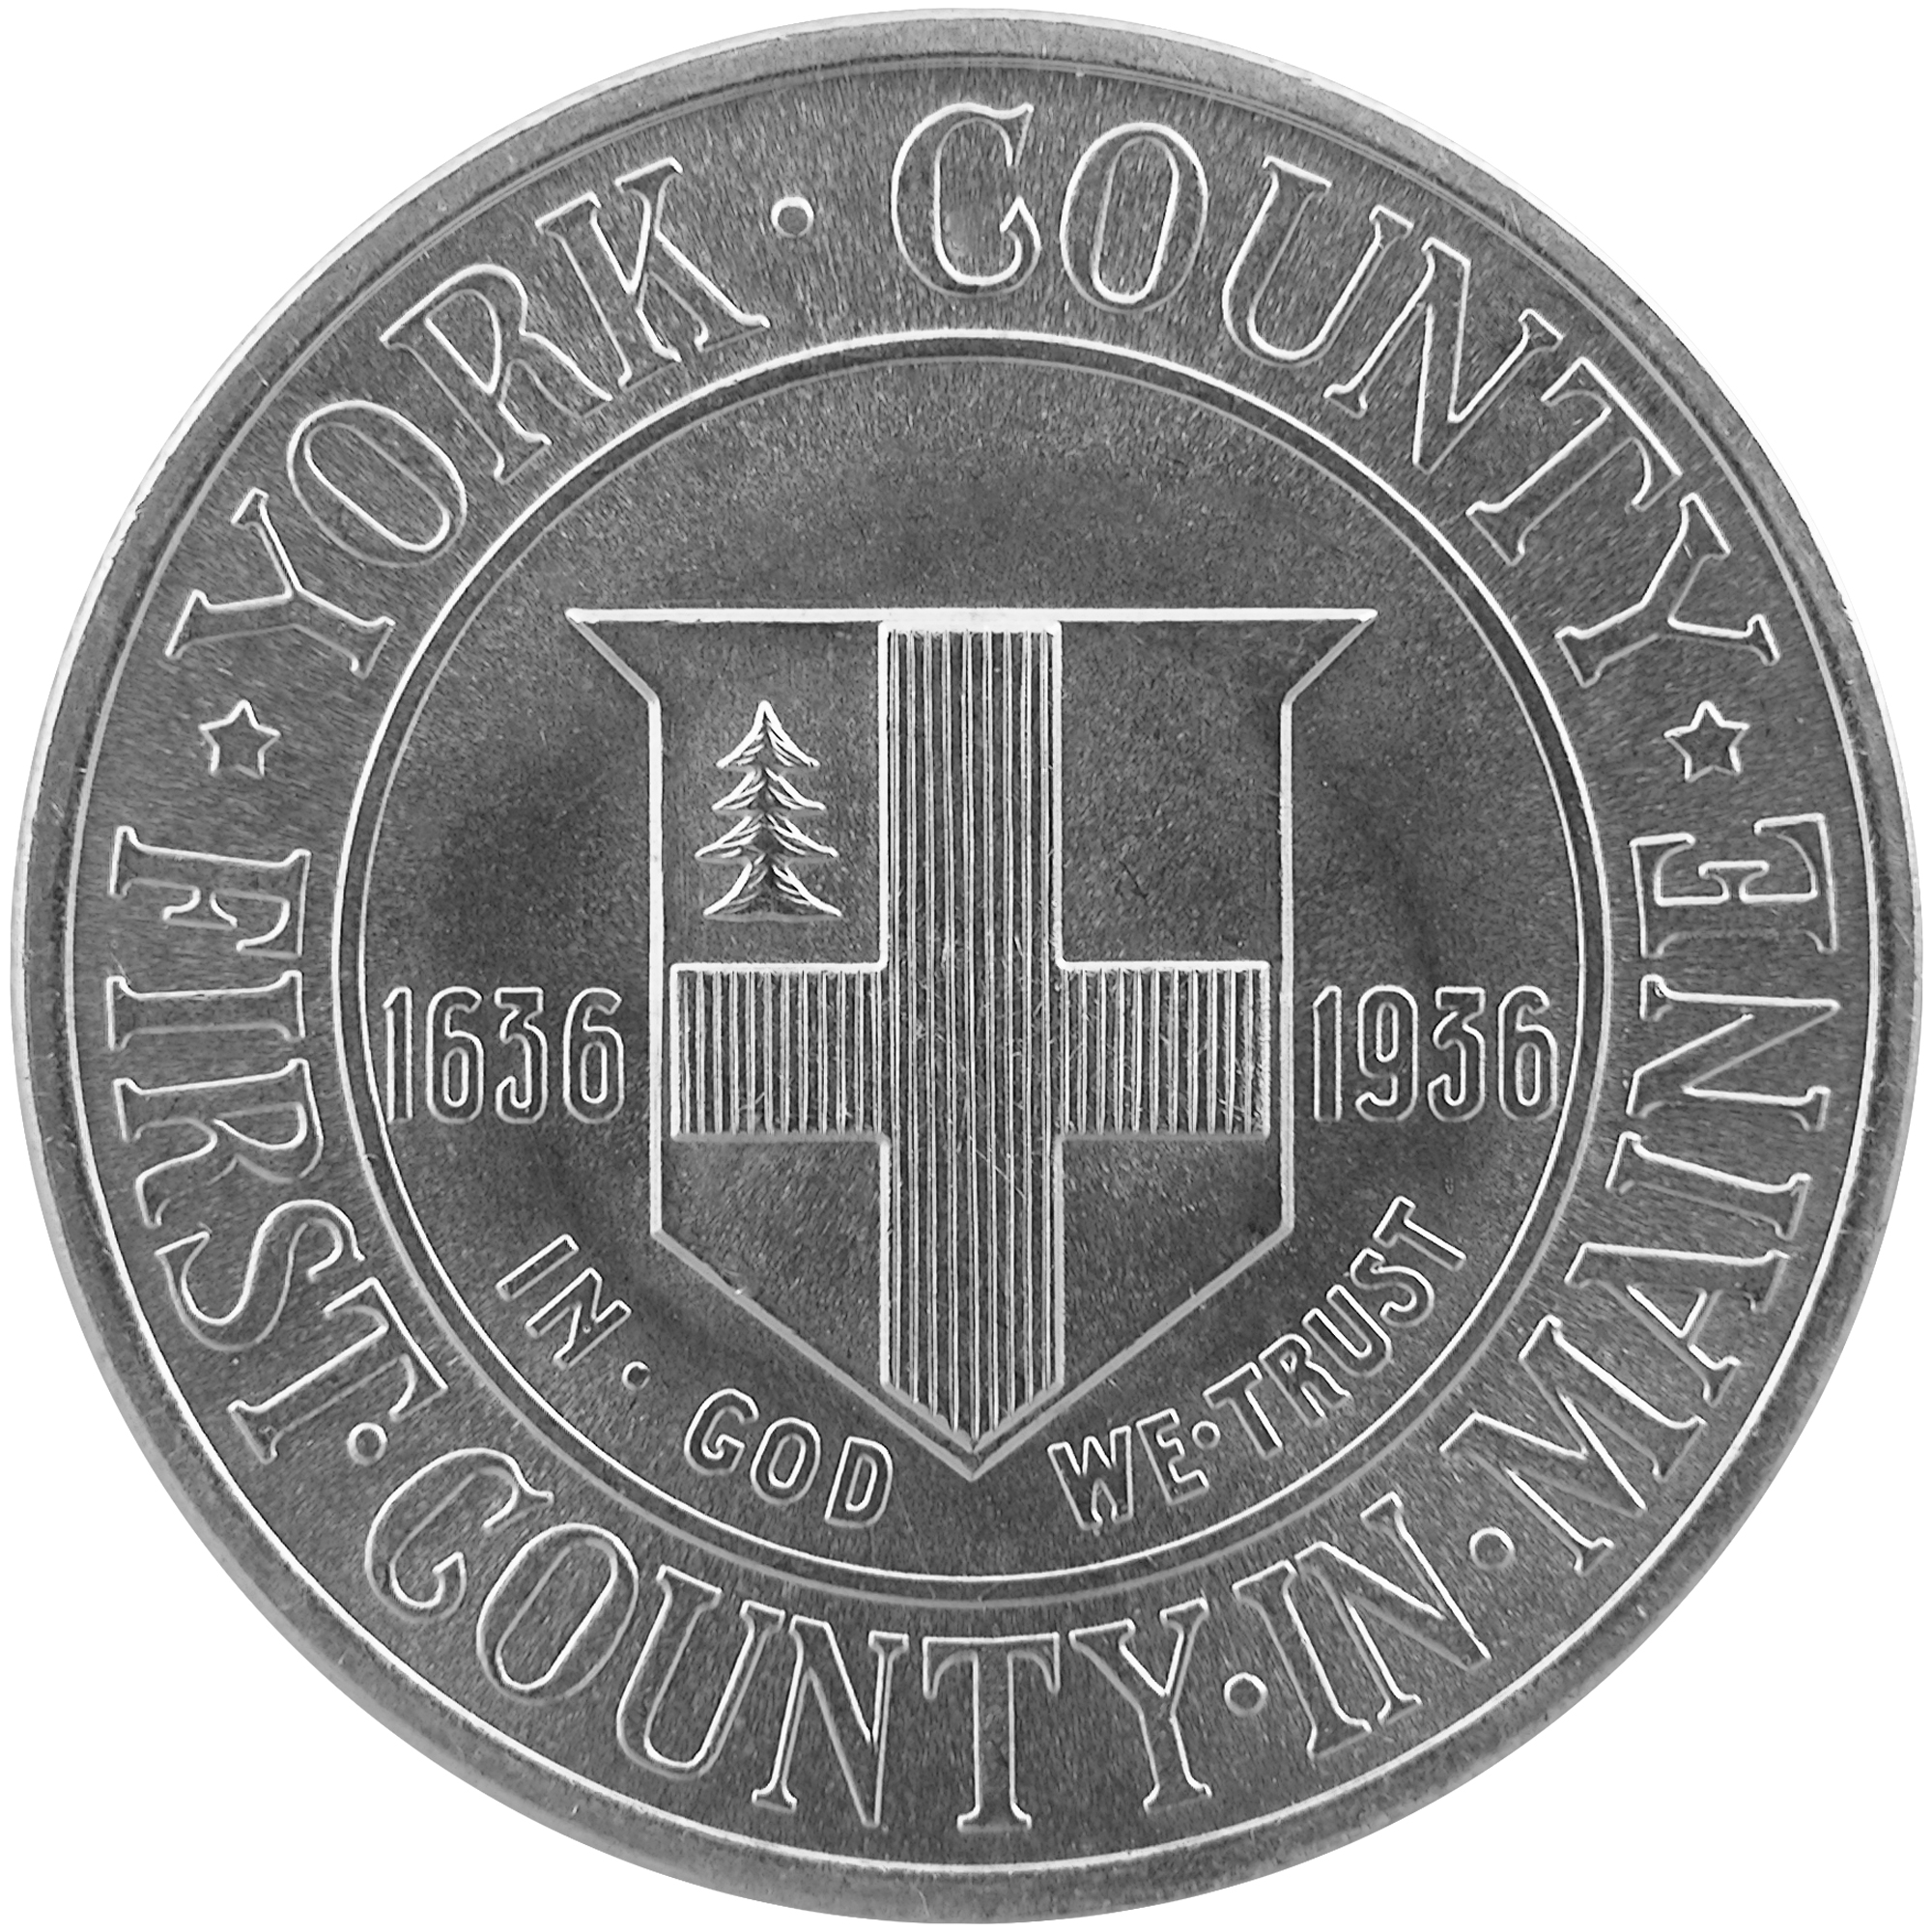 1936 York County Maine Tercentenary Commemorative Silver Half Dollar Coin Reverse